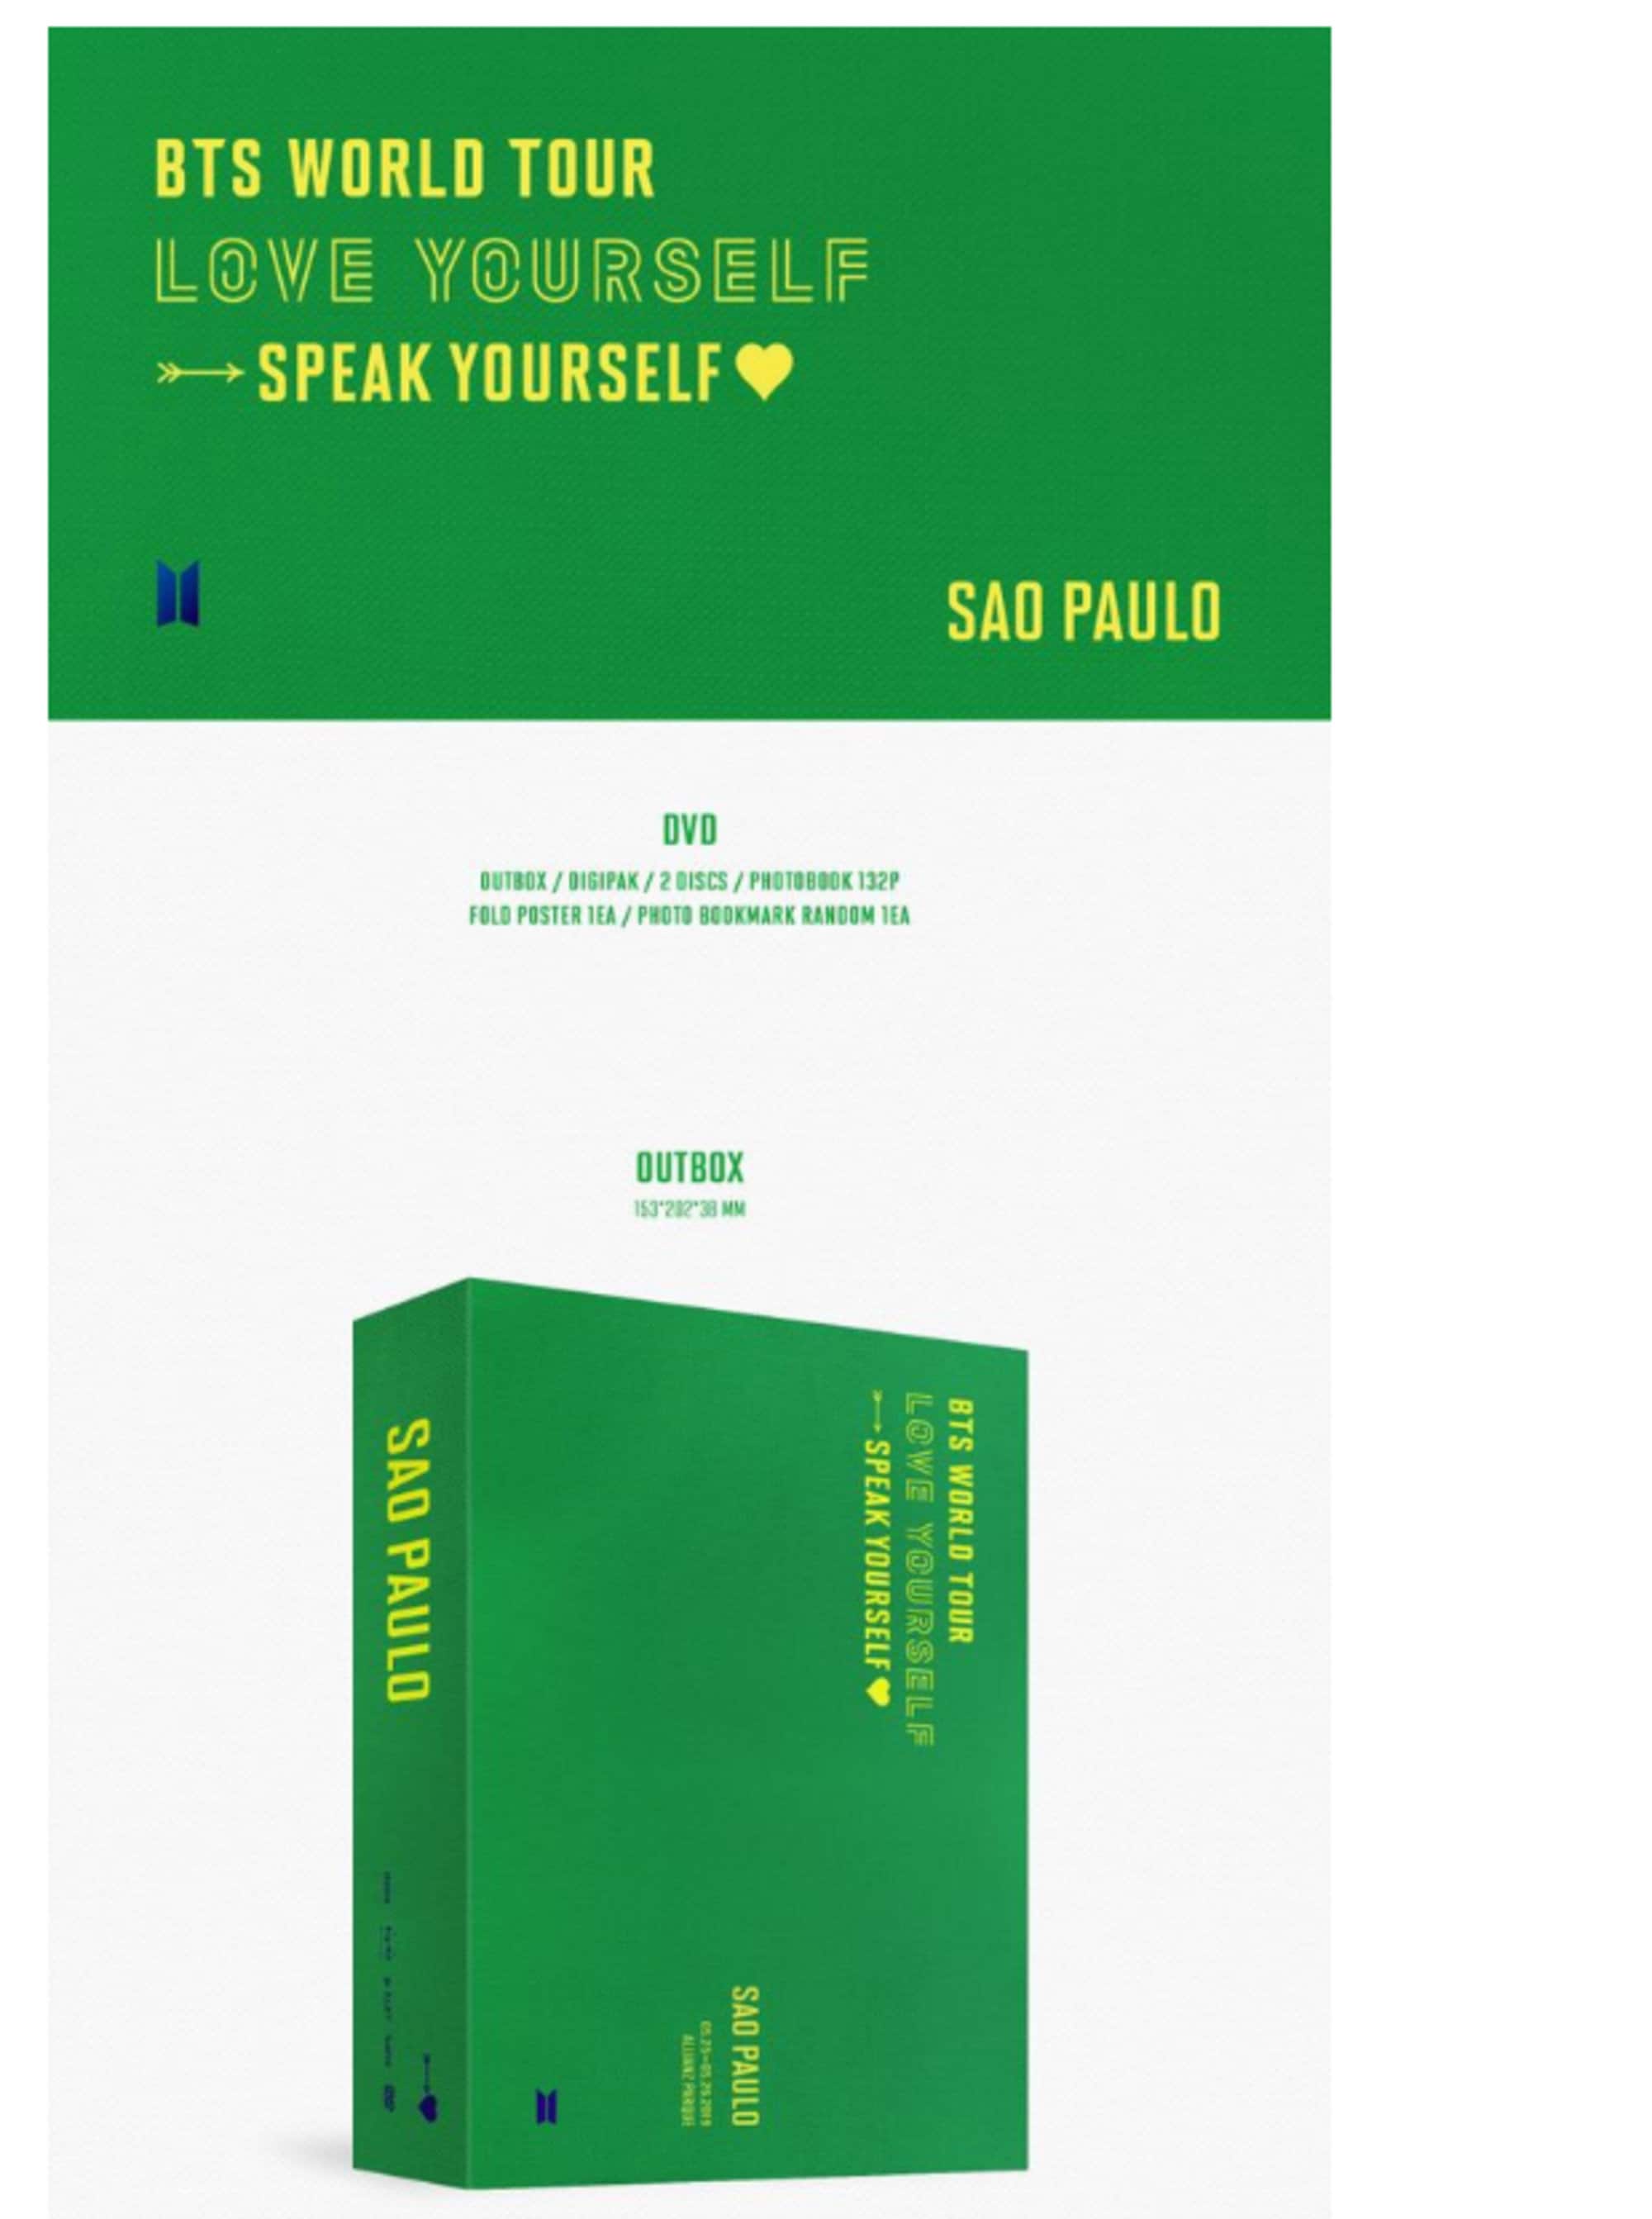 BTS World Tour Love Yourself Speak Sao Paulo 2 DVD Full Set - Etsy